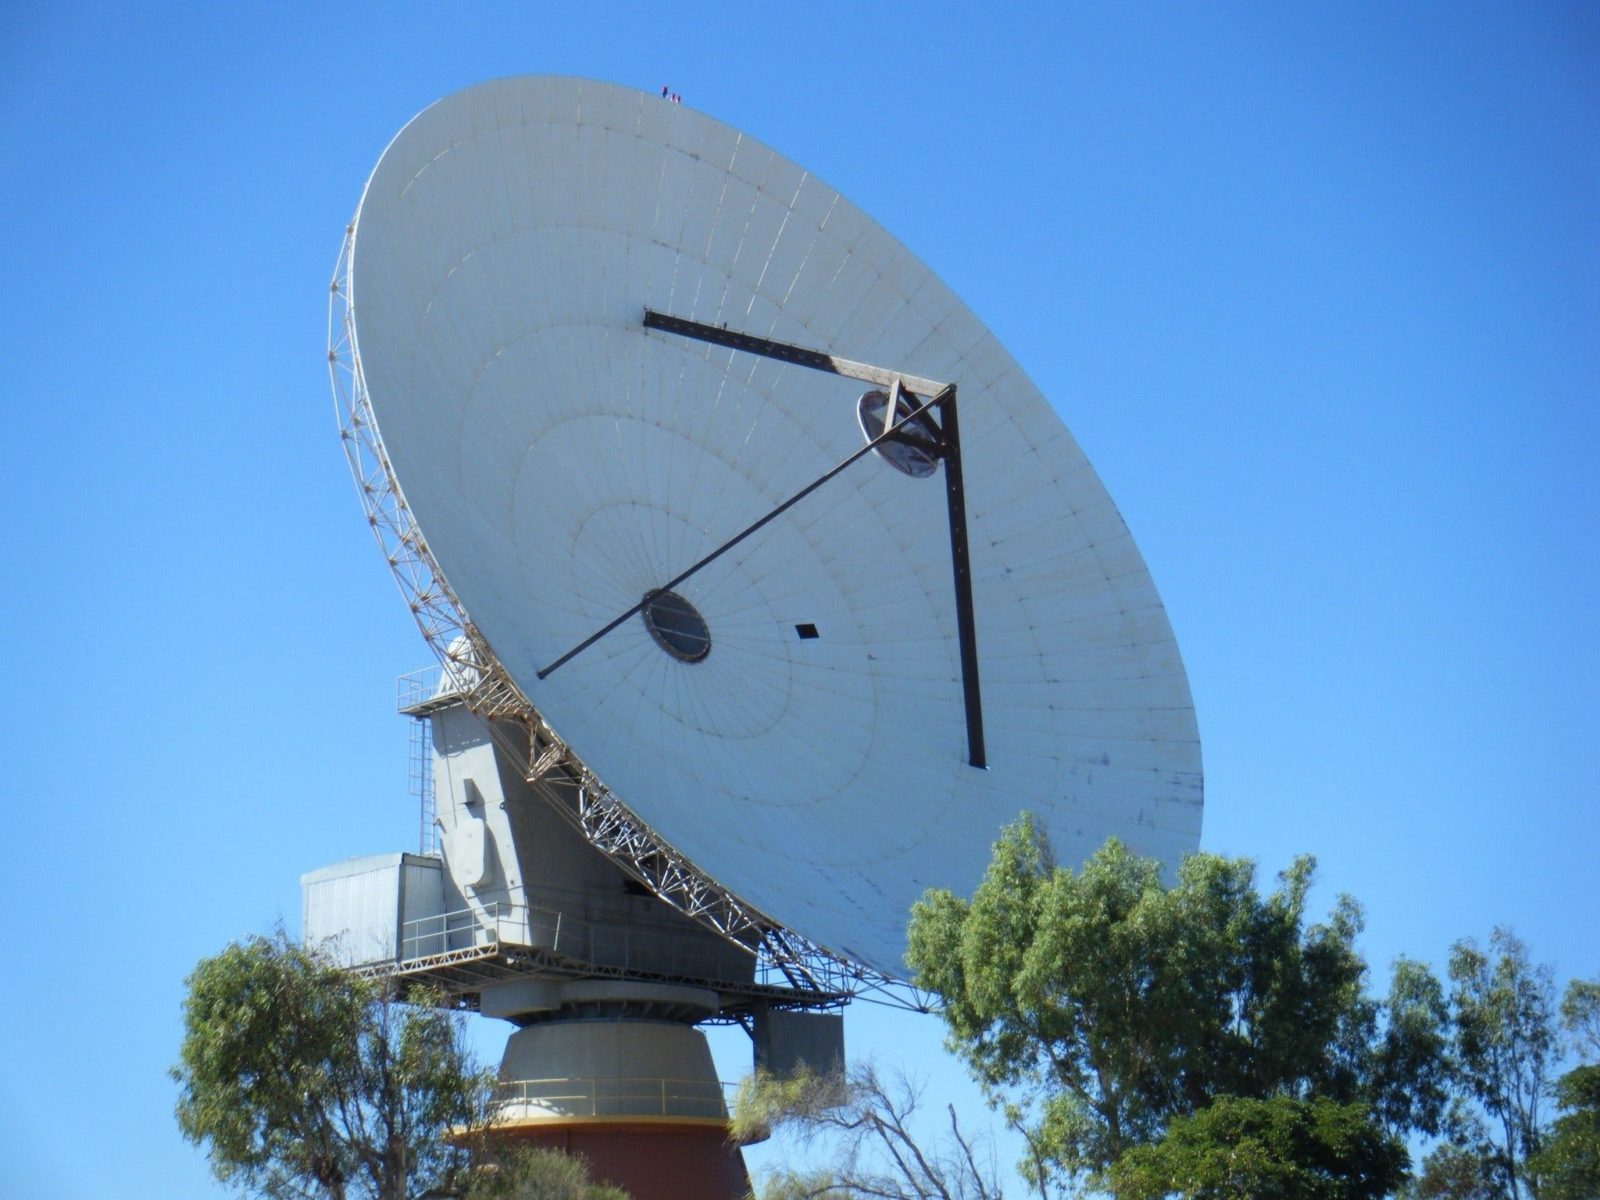 Carnarvon Space and Technology Museum, Browns Range, Western Australia